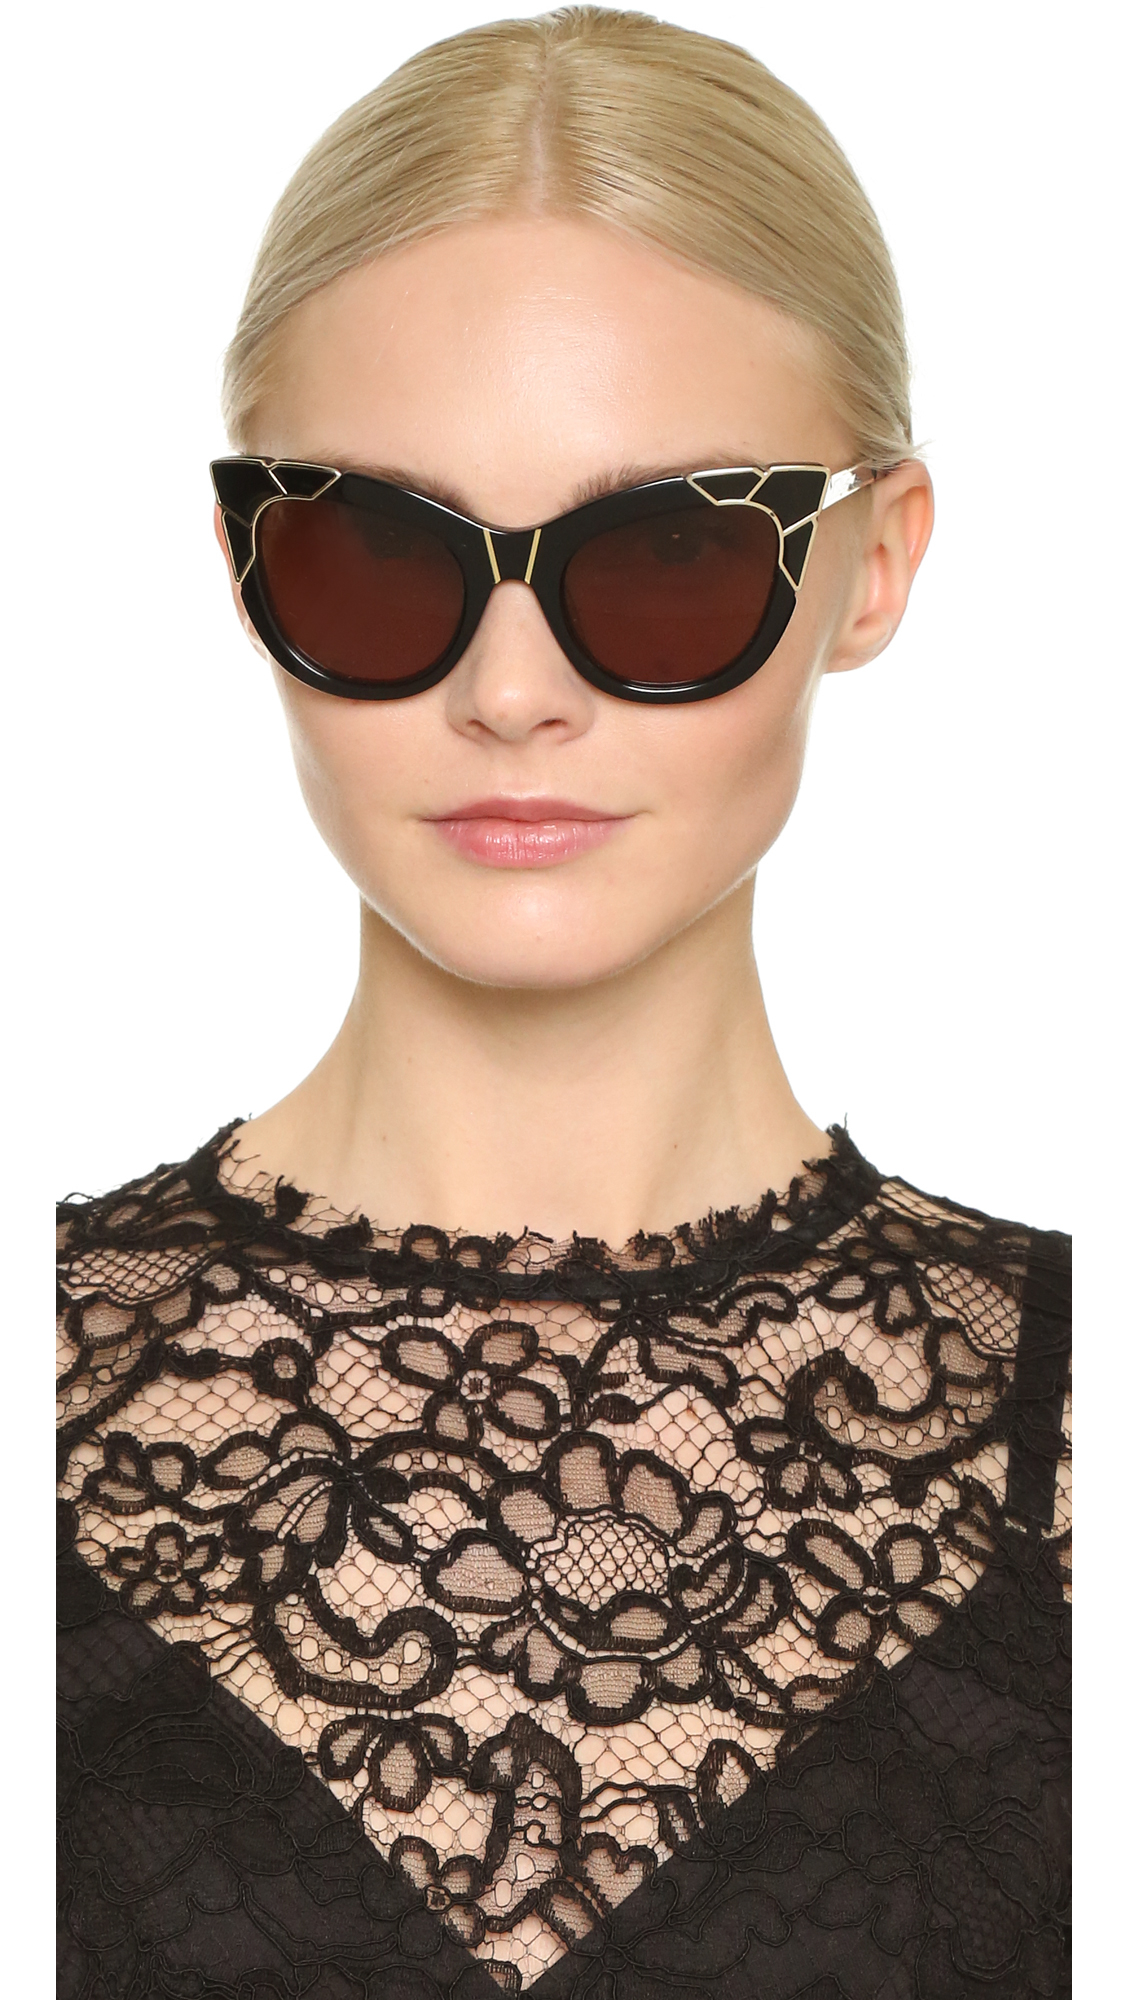 Pared Eyewear Puss & Boots Sunglasses in Black/Brown (Black) | Lyst